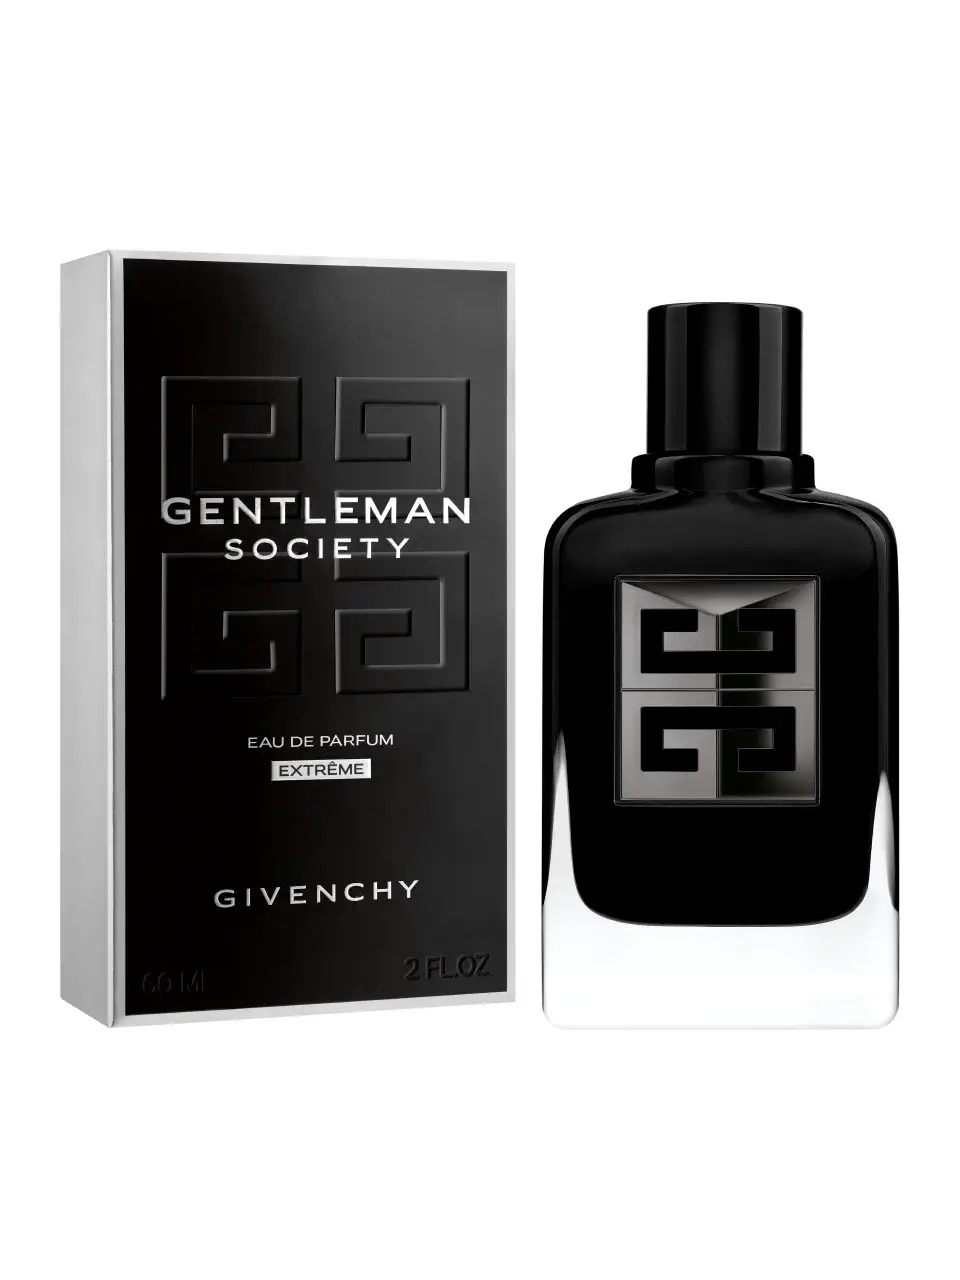 Givenchy Gentleman Society Eau de Parfum Extreme 60 ml